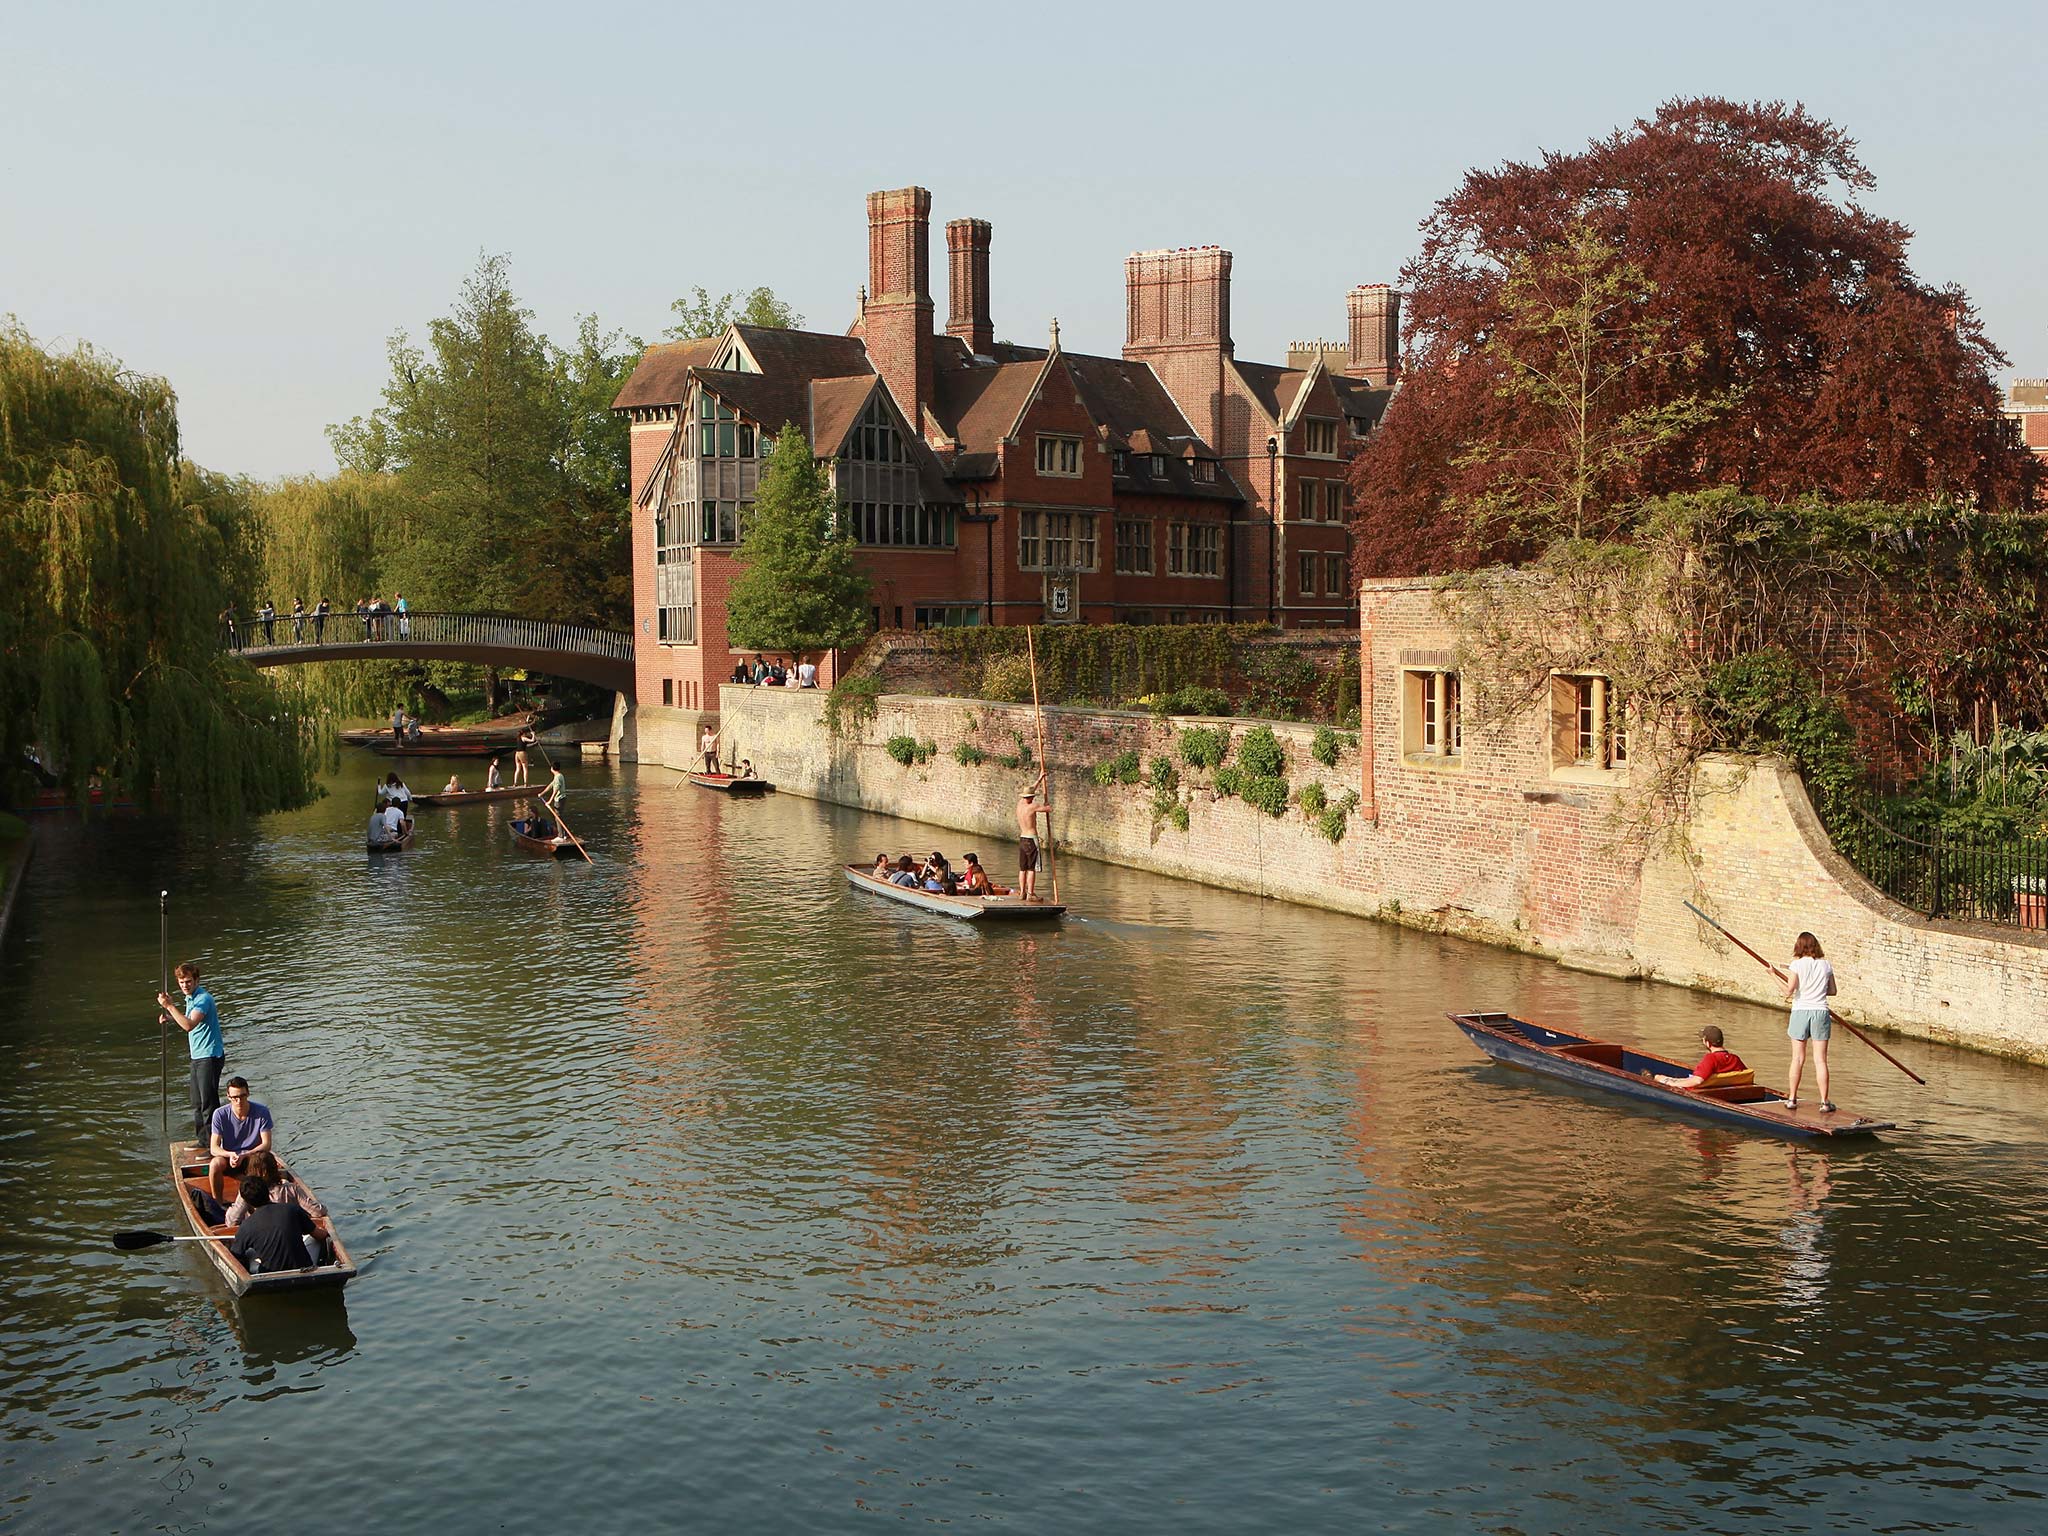 University of Cambridge, pictured